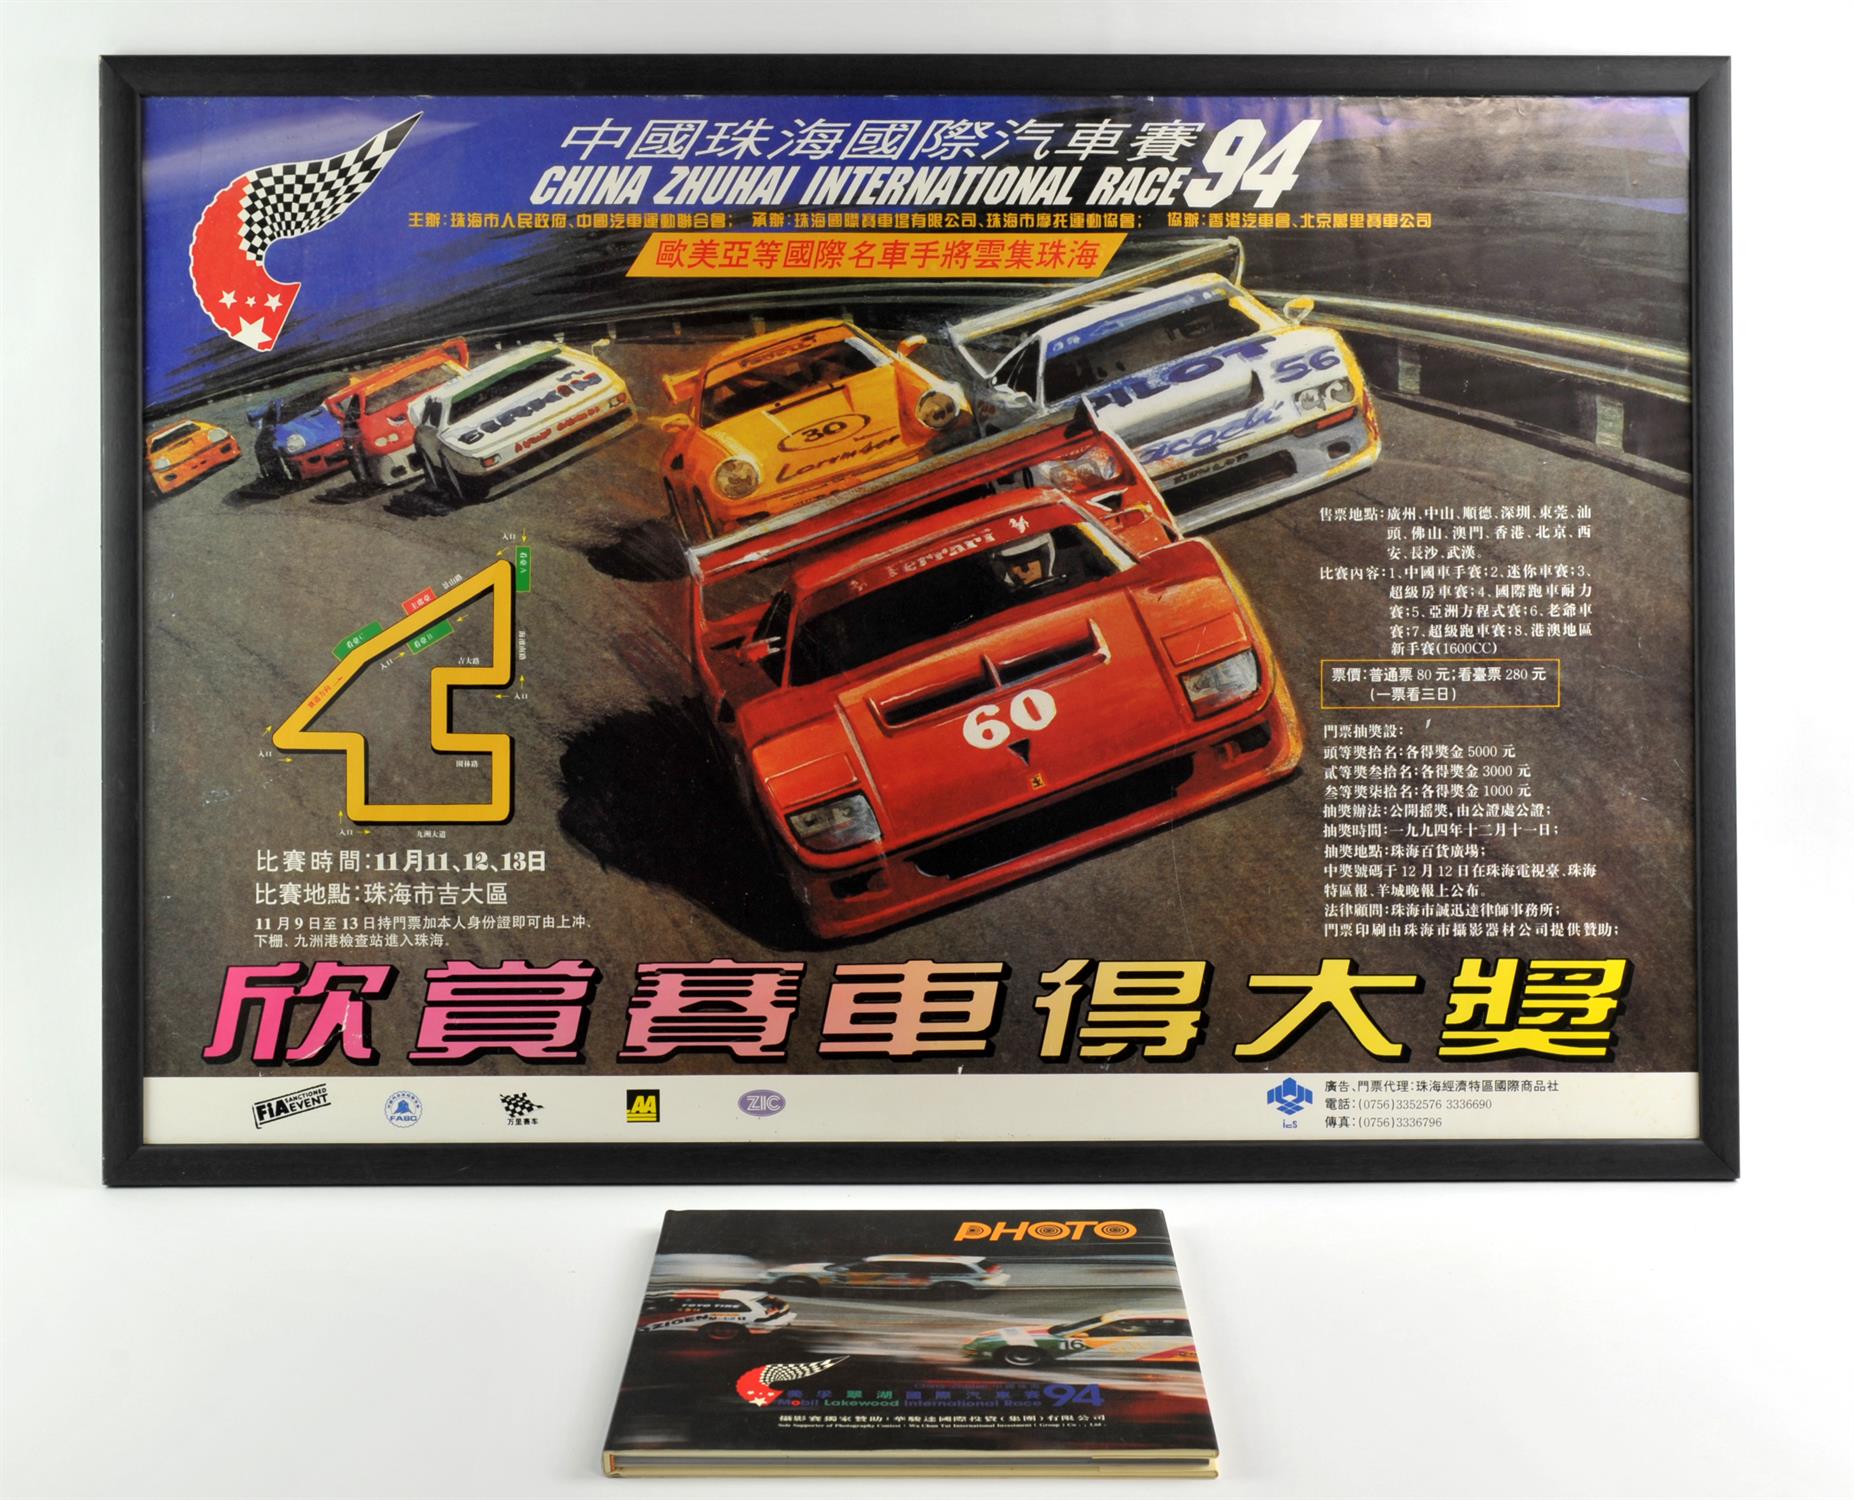 China Zhuhai International Race 94 Poster (framed 36"x25") along with a Photobook.